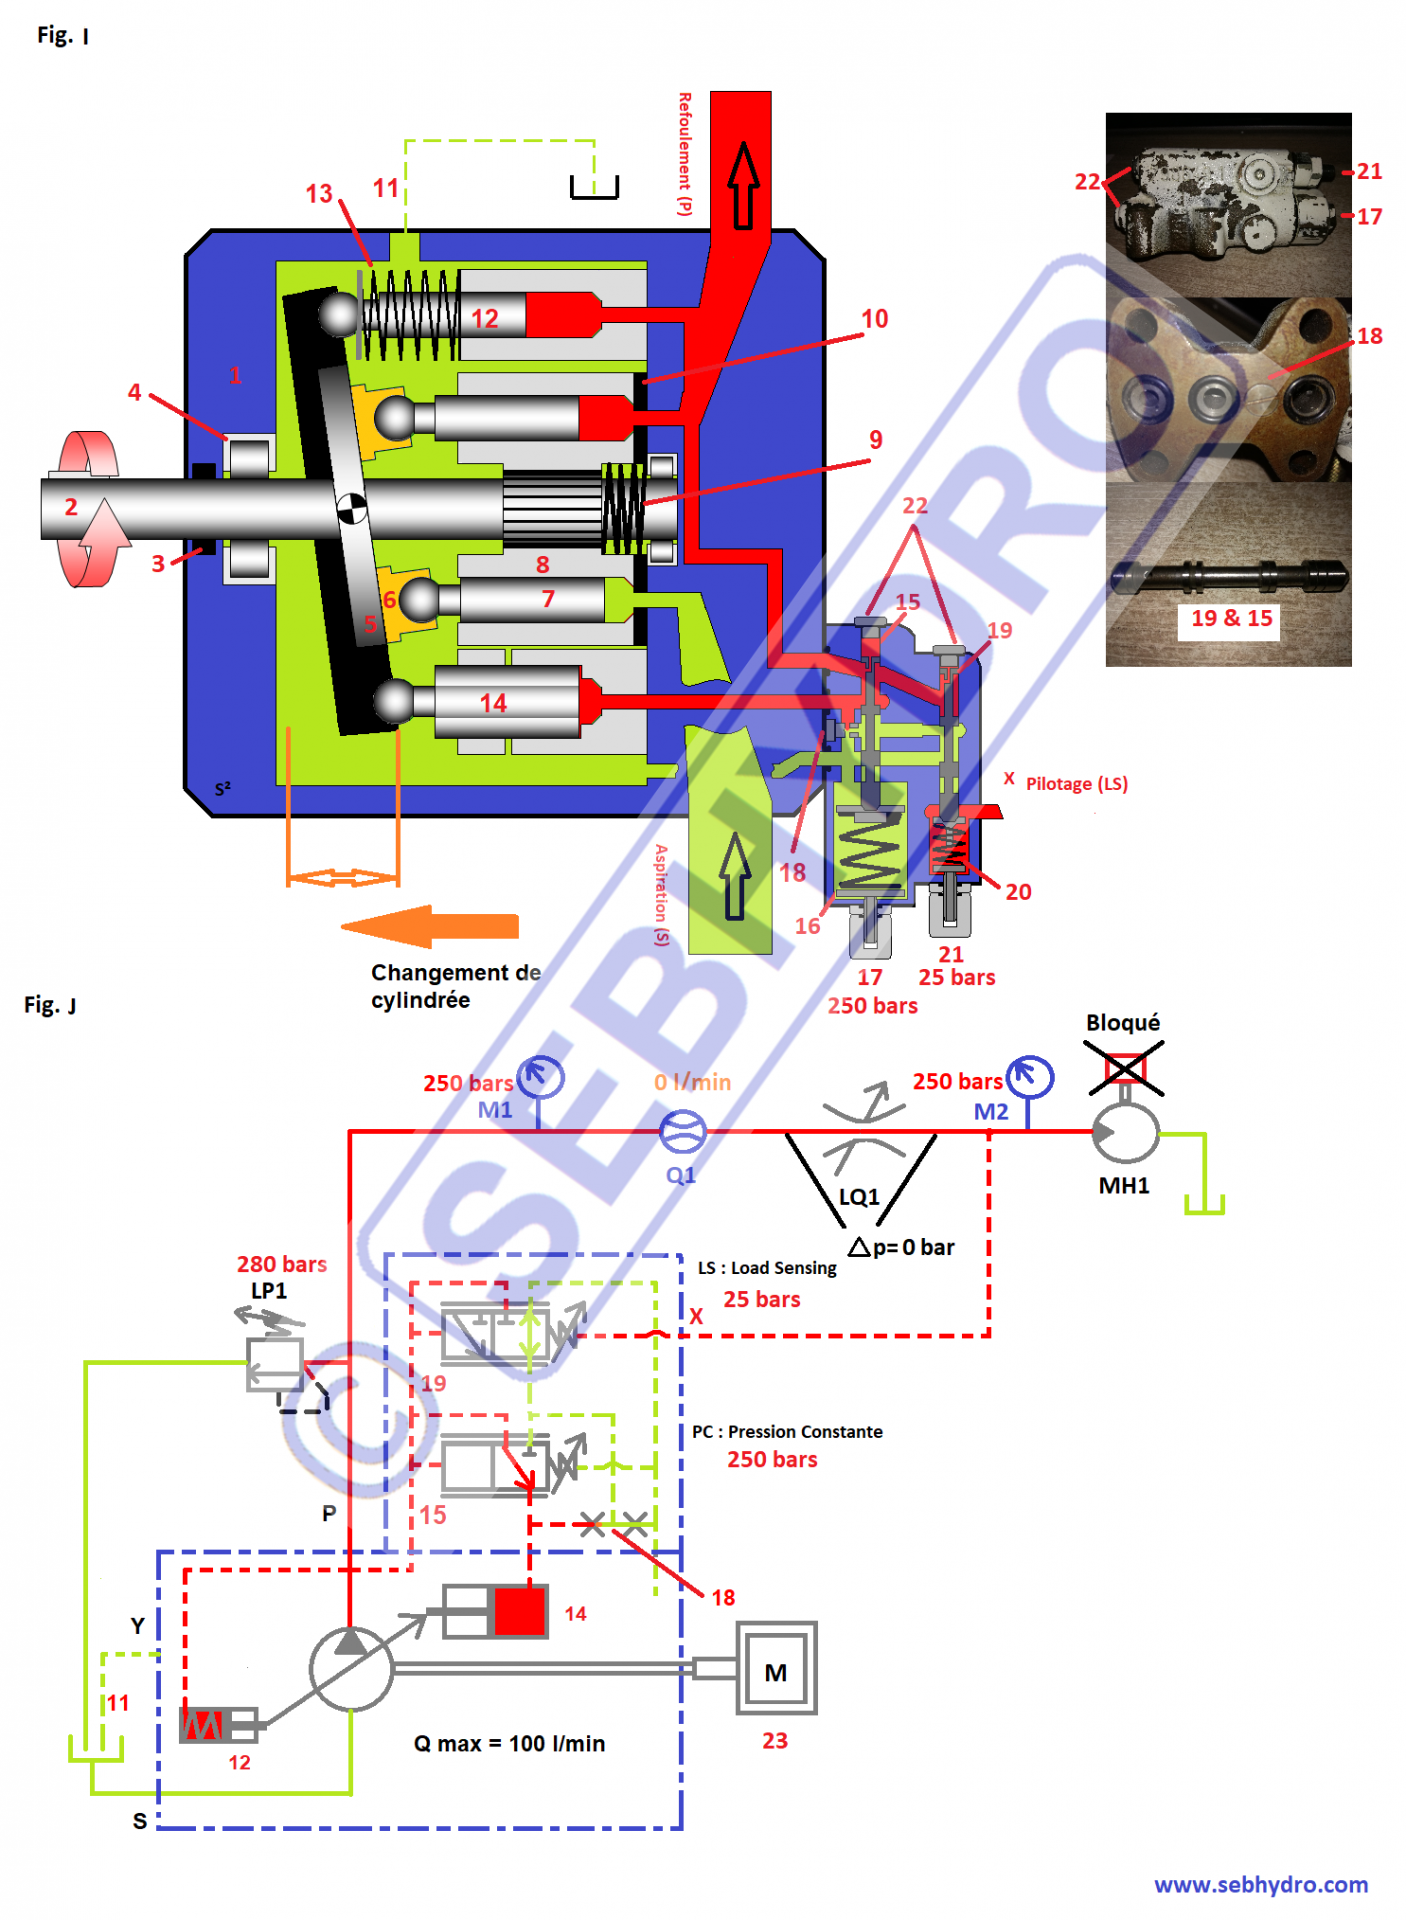 6 pompe a pistons regulation load sensing phase butee mecanique